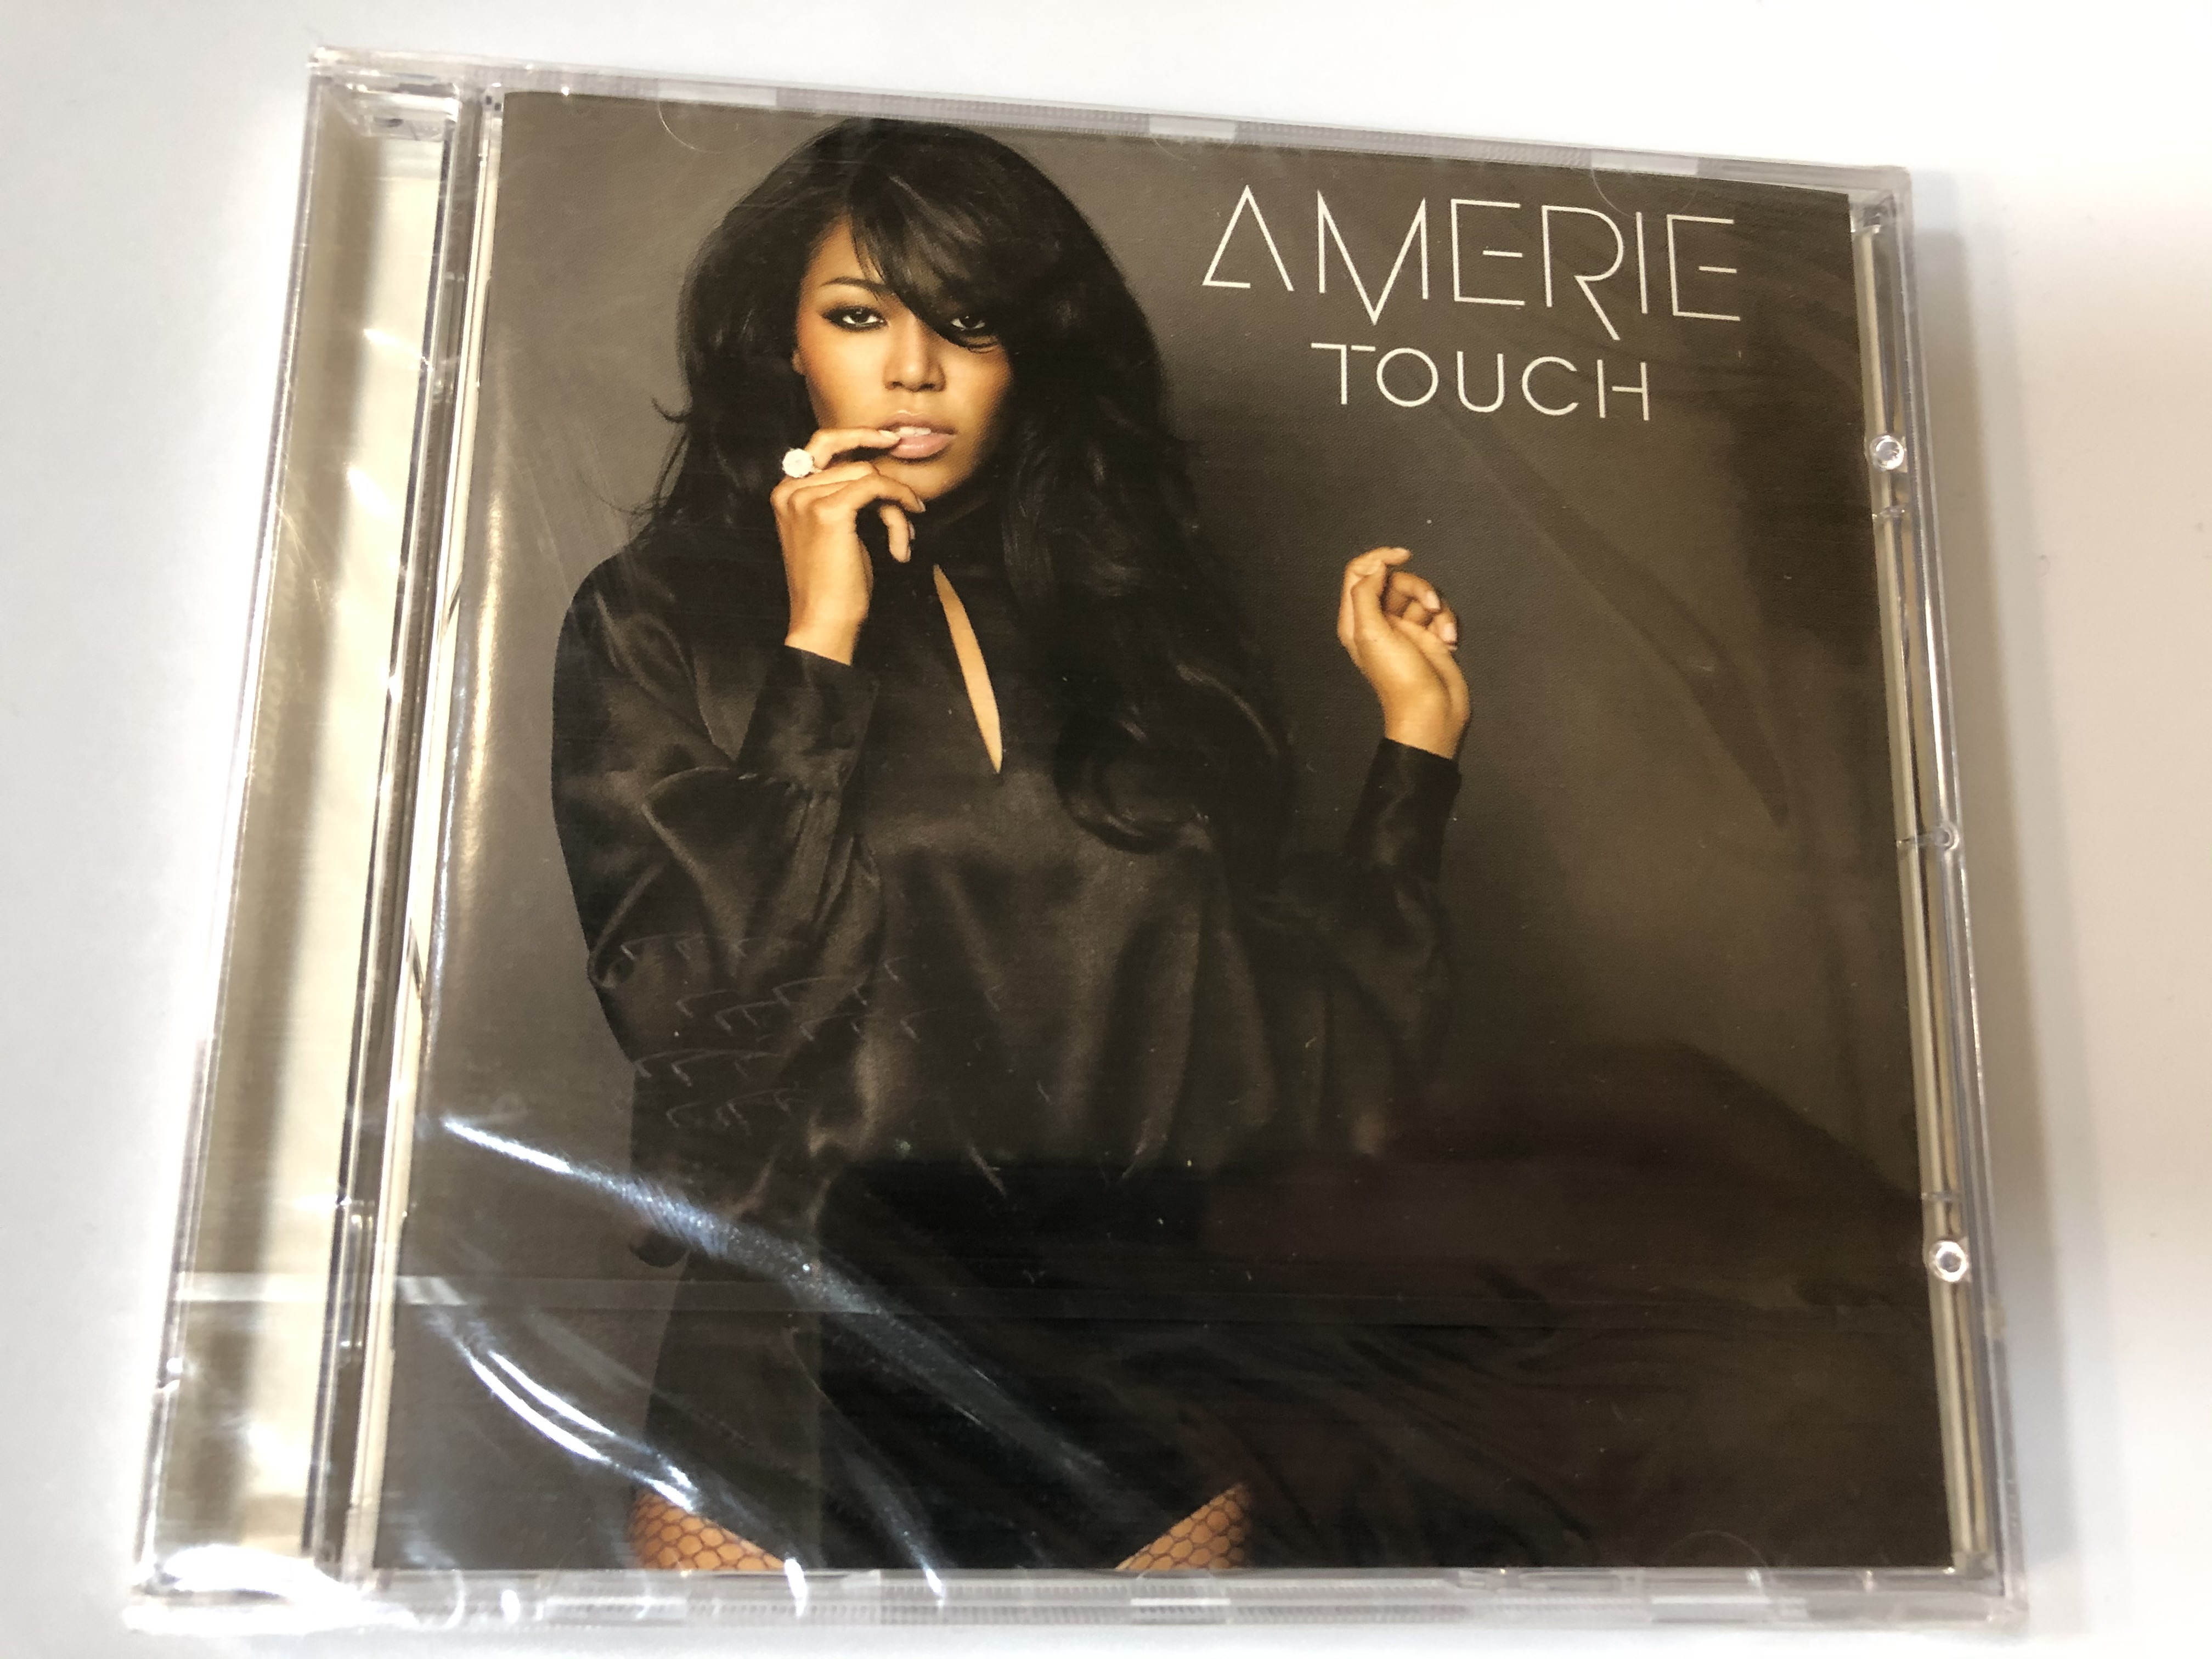 amerie-touch-sony-urban-music-audio-cd-2005-520166-9-1-.jpg